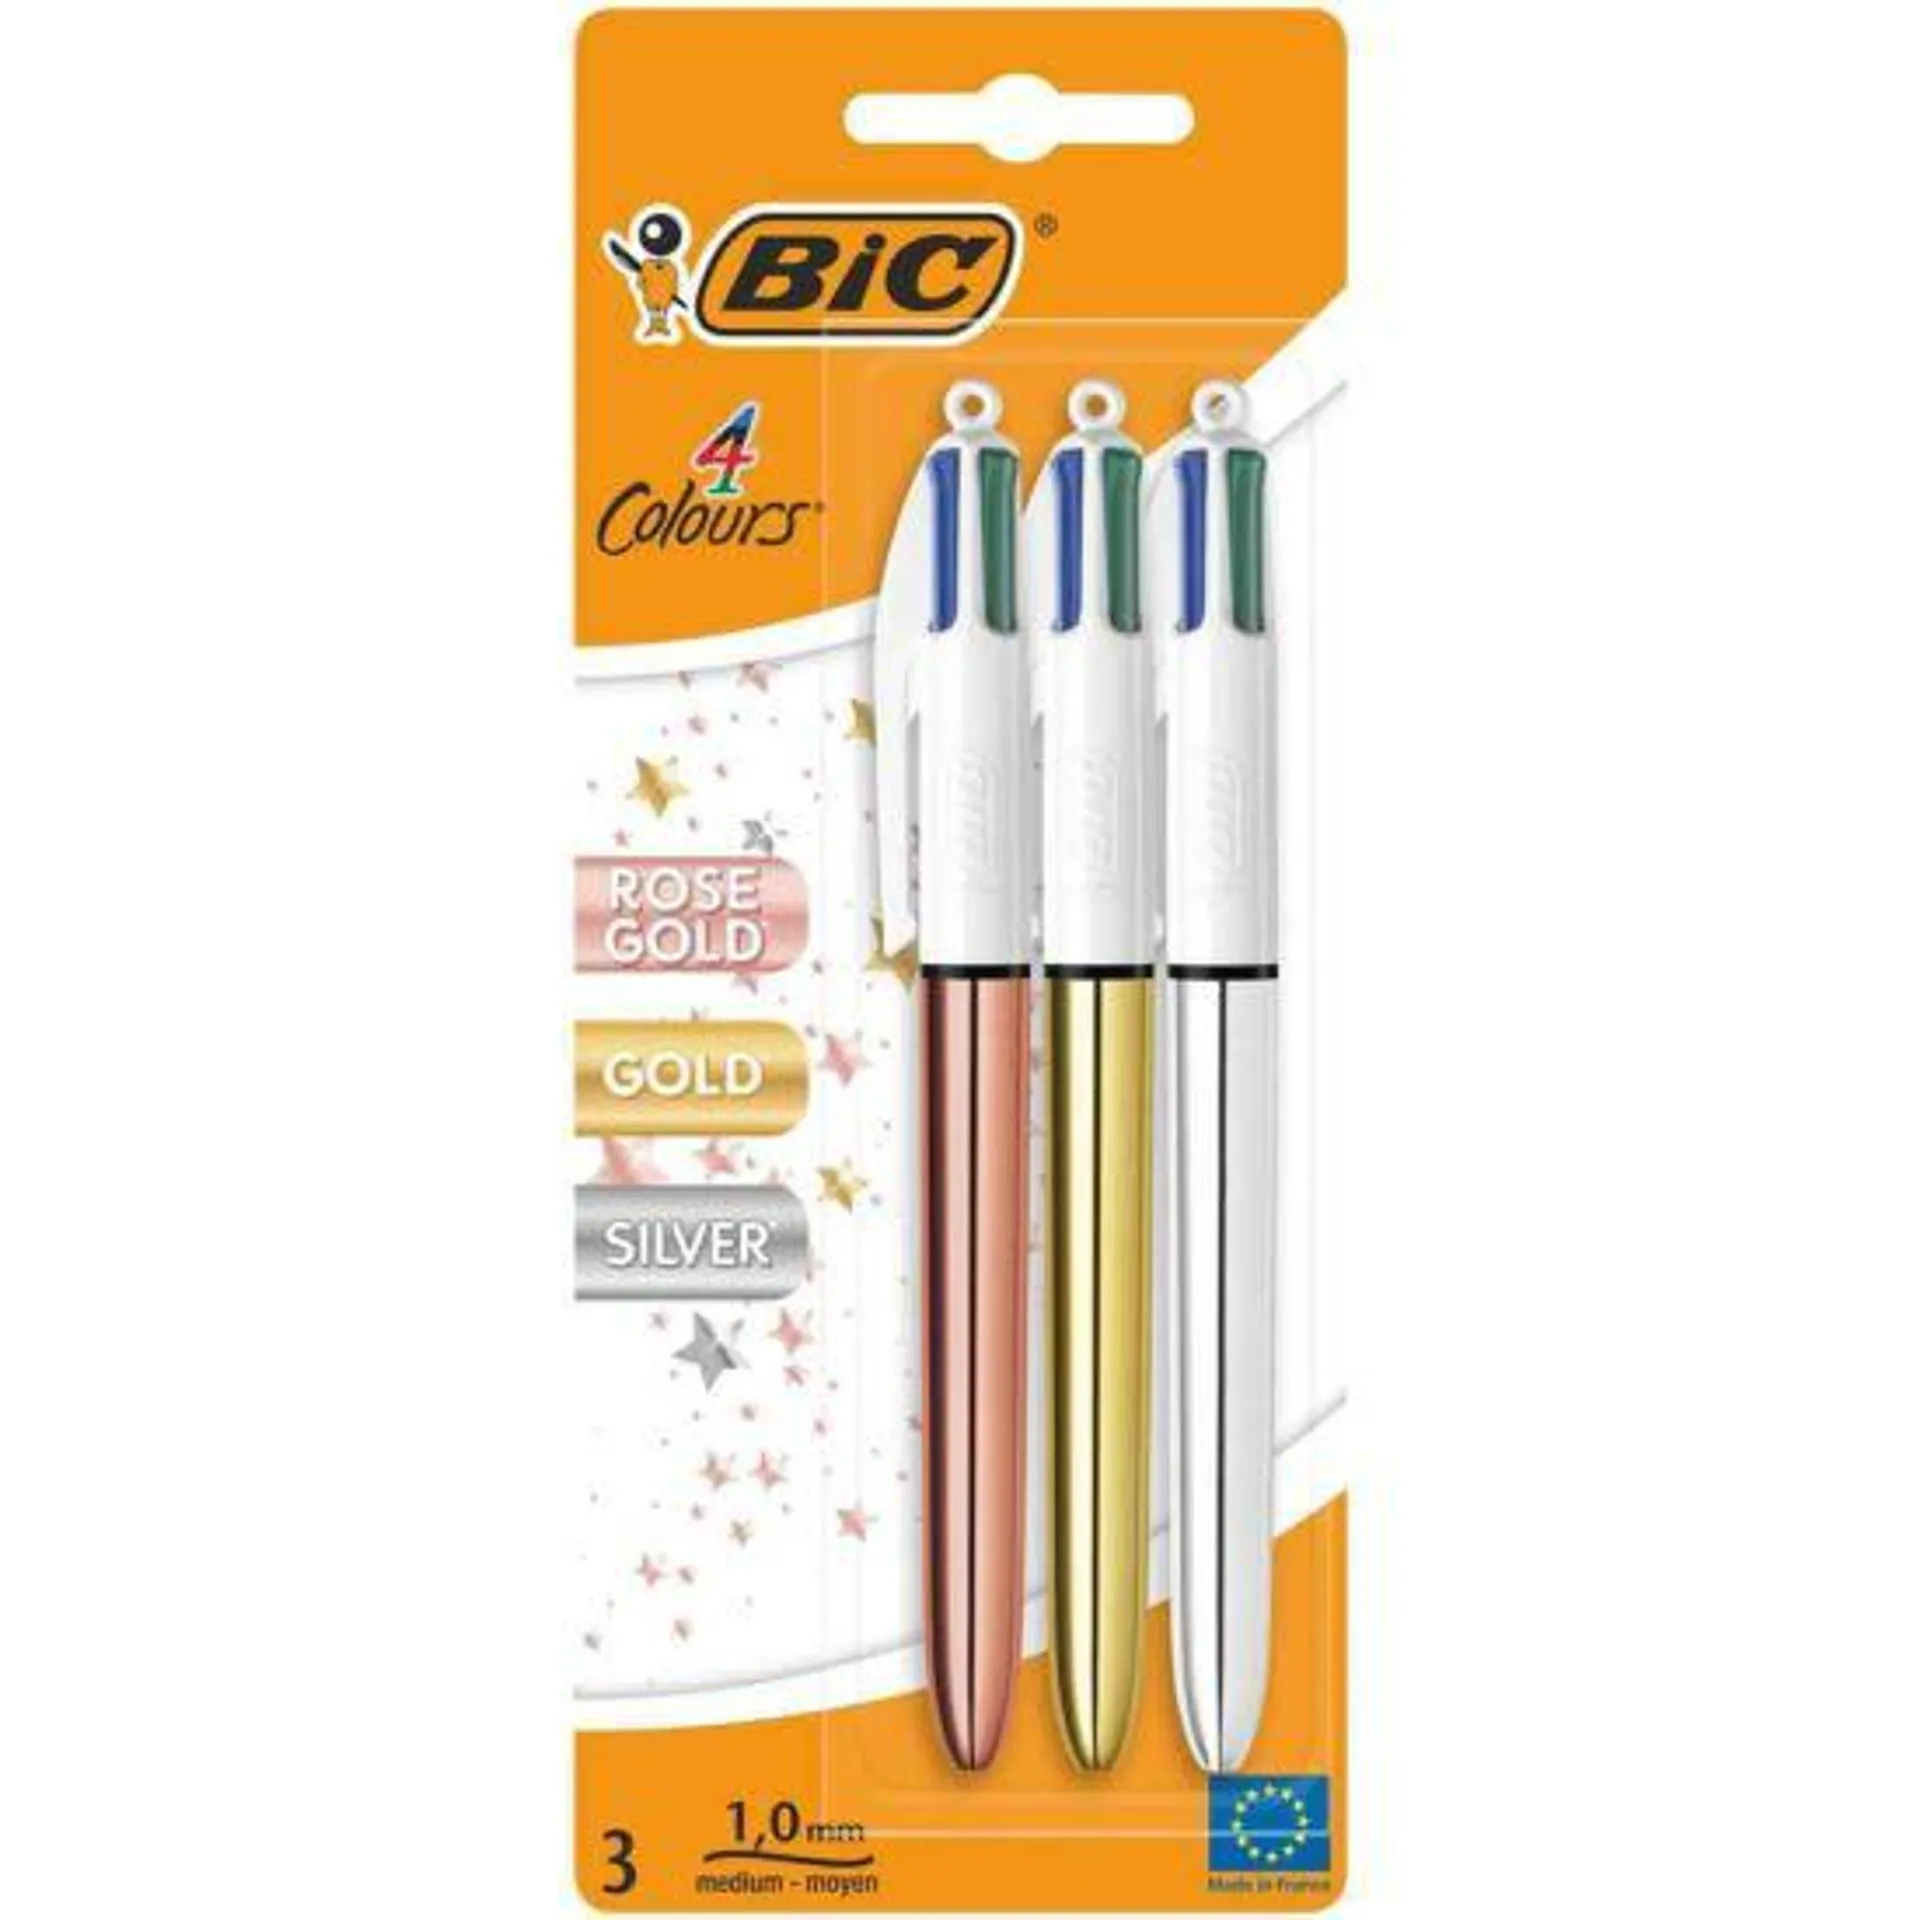 BIC 4 Colour Ballpoint Pens Pack 3